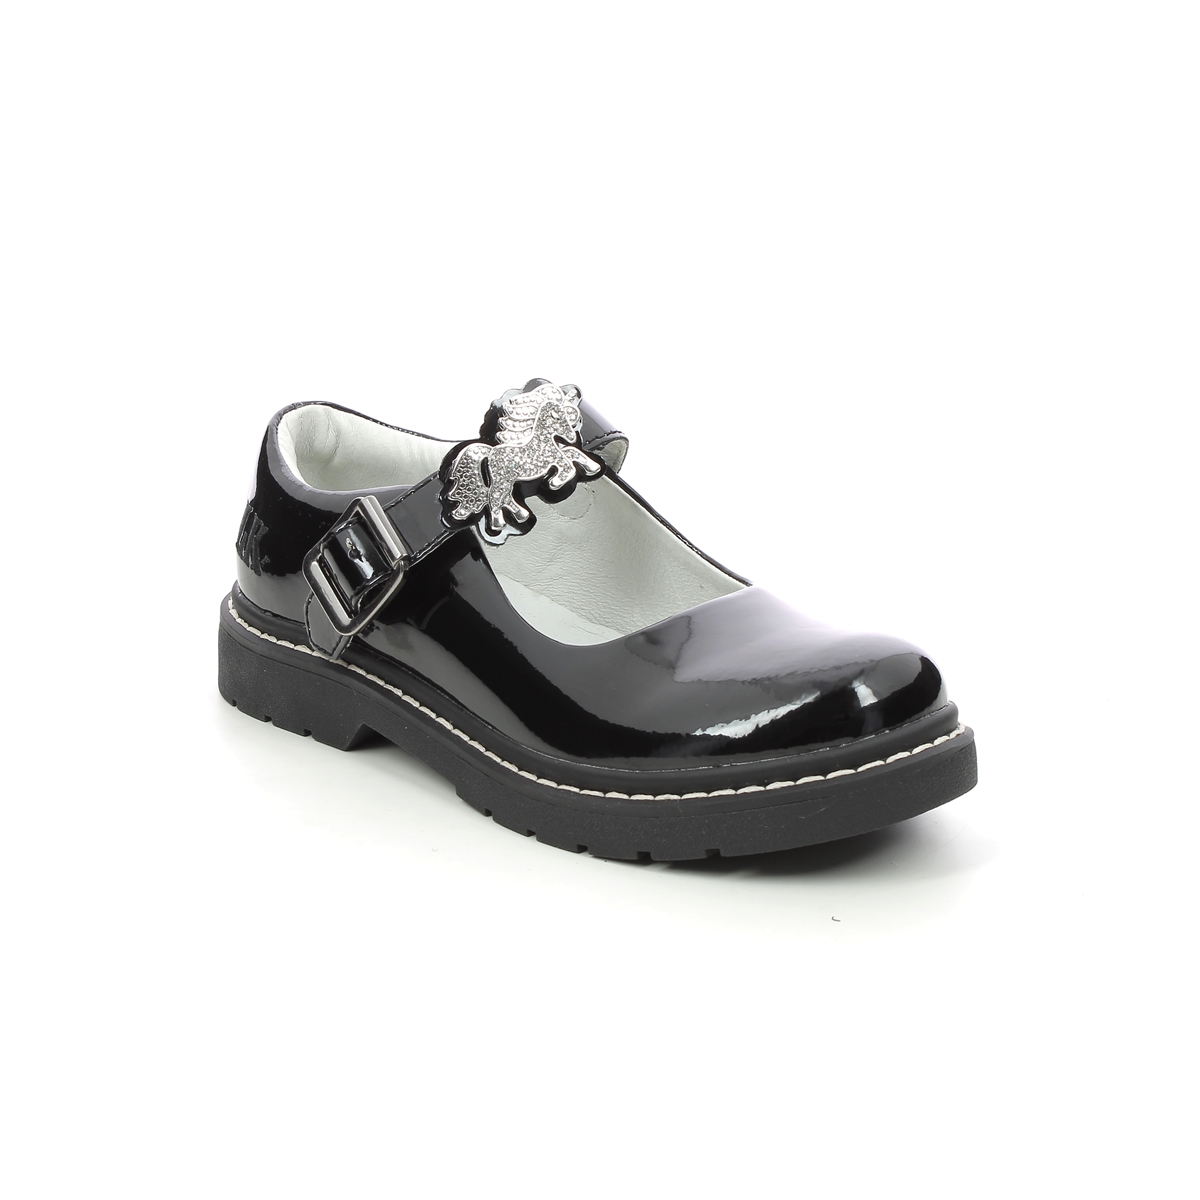 Lelli Kelly Bessie Unicorn Black patent Kids Girls shoes LK8361-DB01 in a Plain  in Size 36